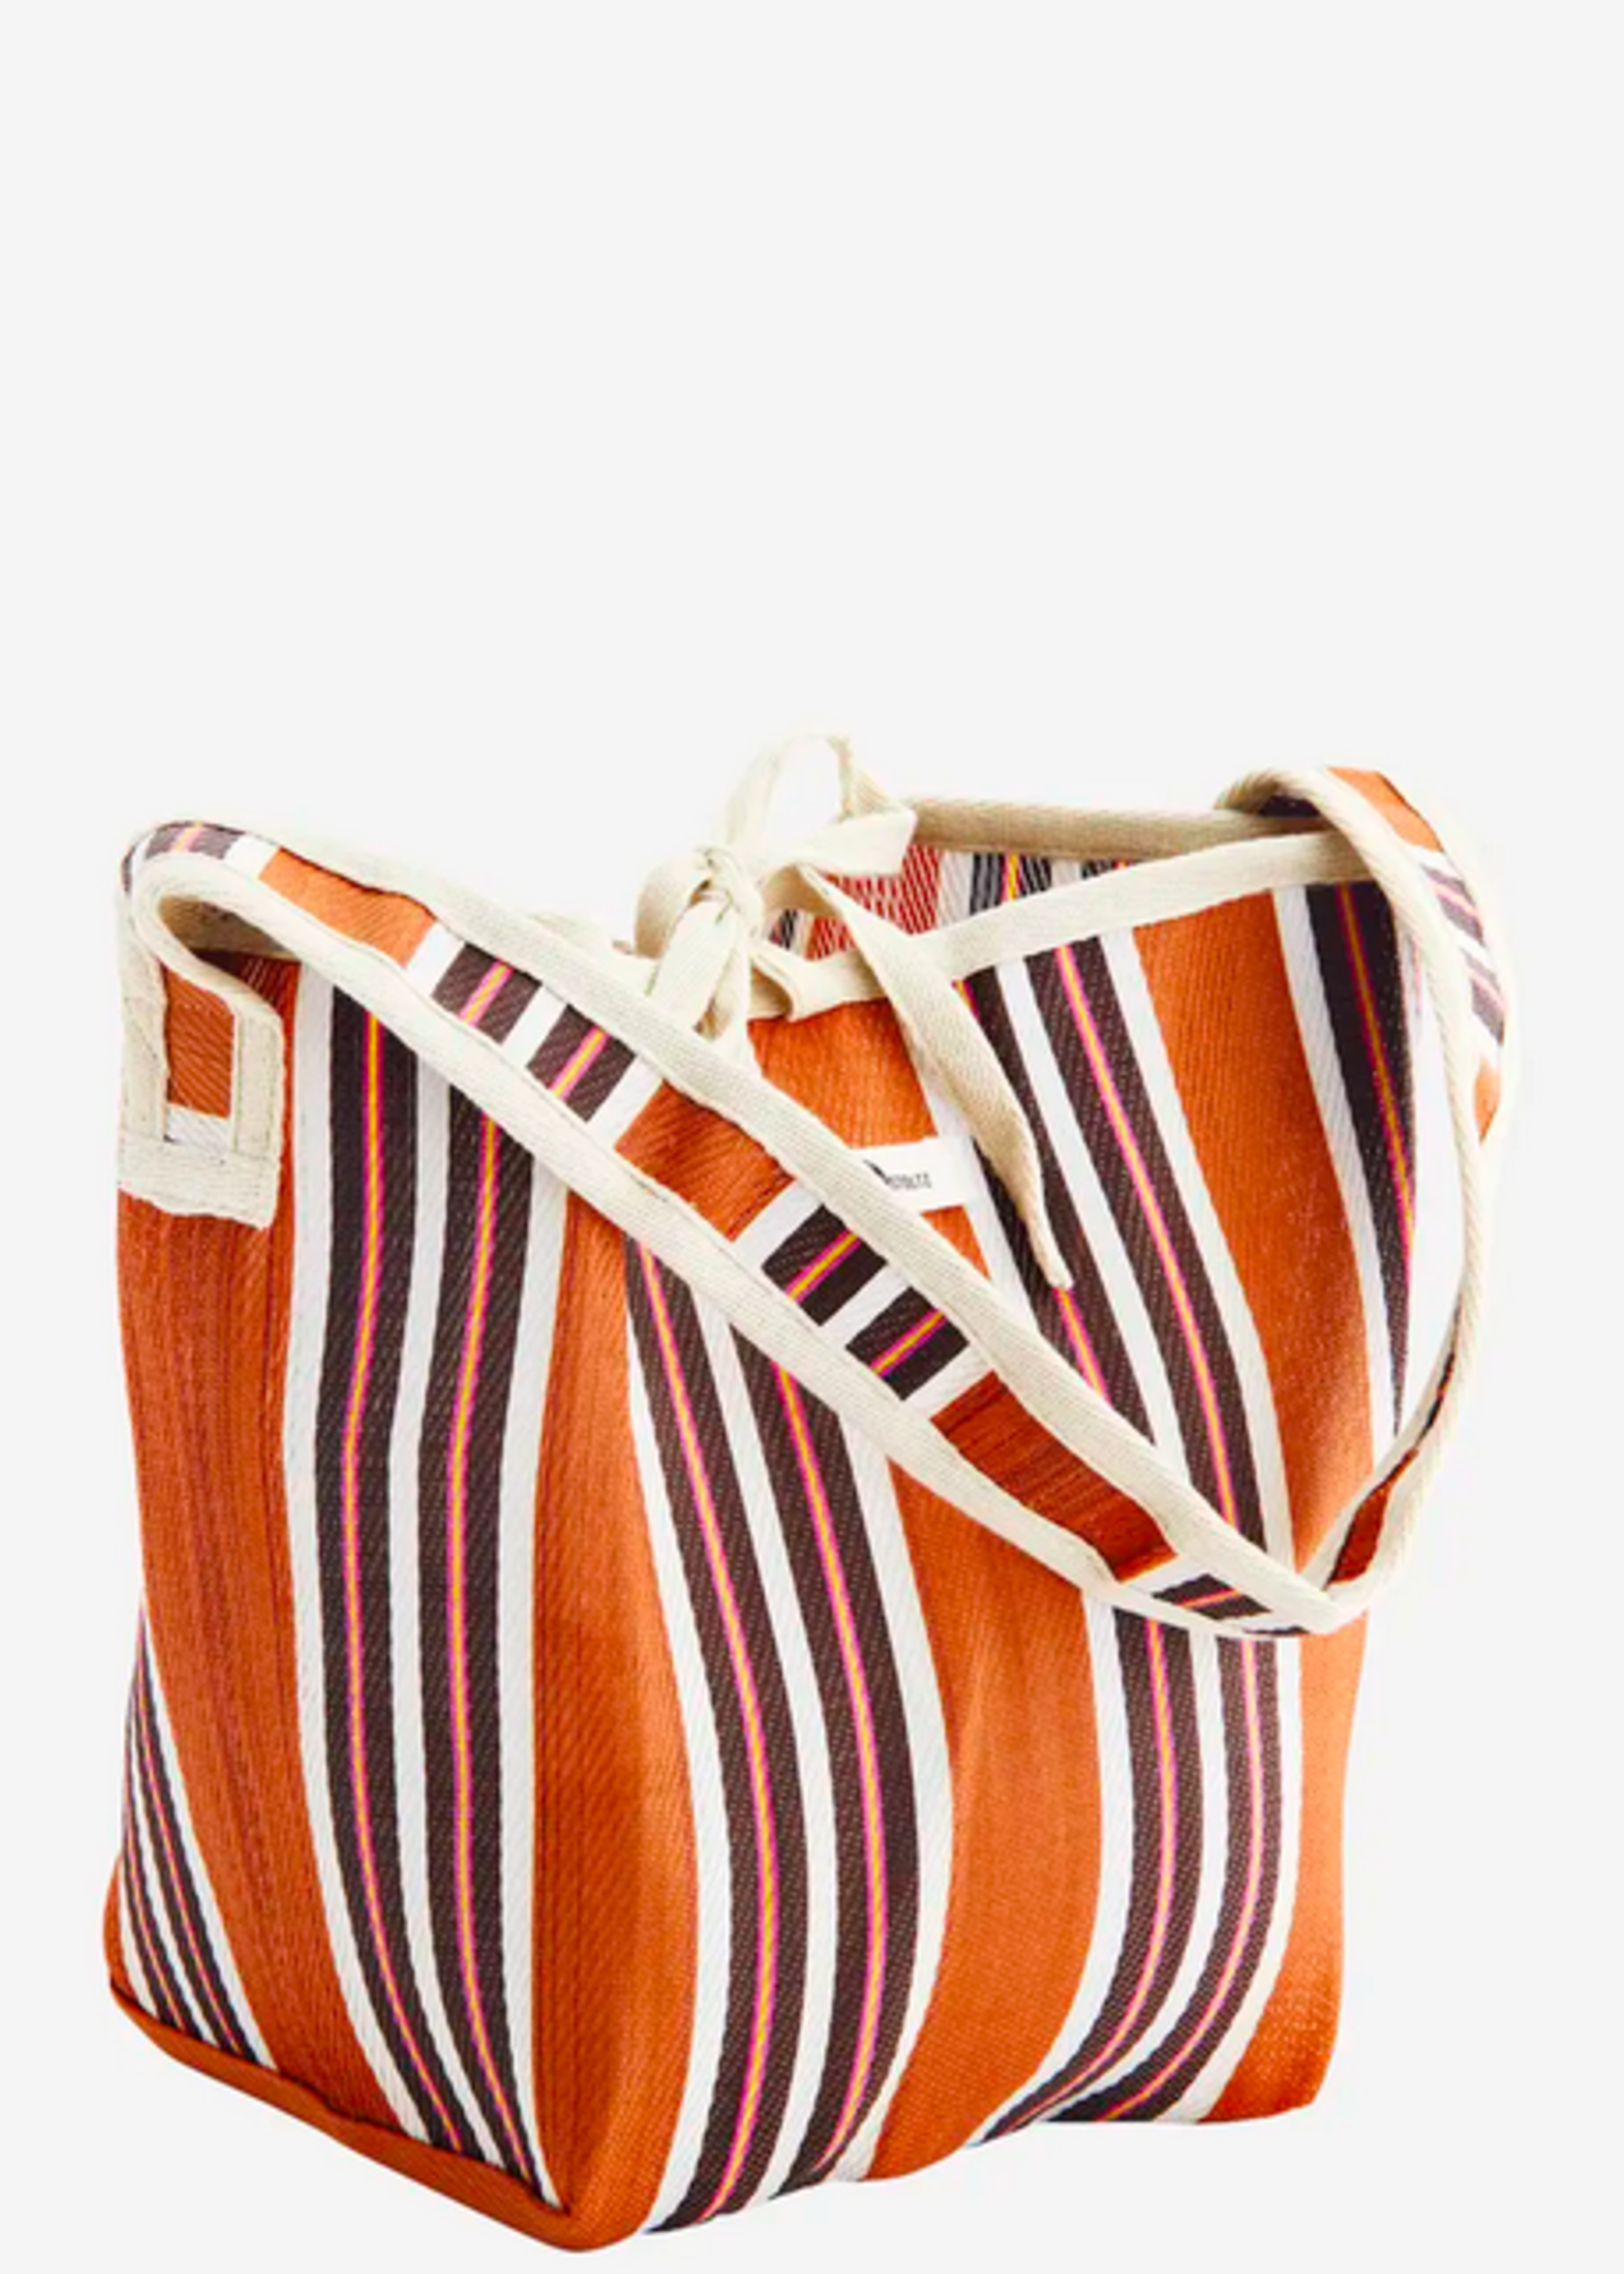 madam stoltz Recycled bag Orange, white, brown